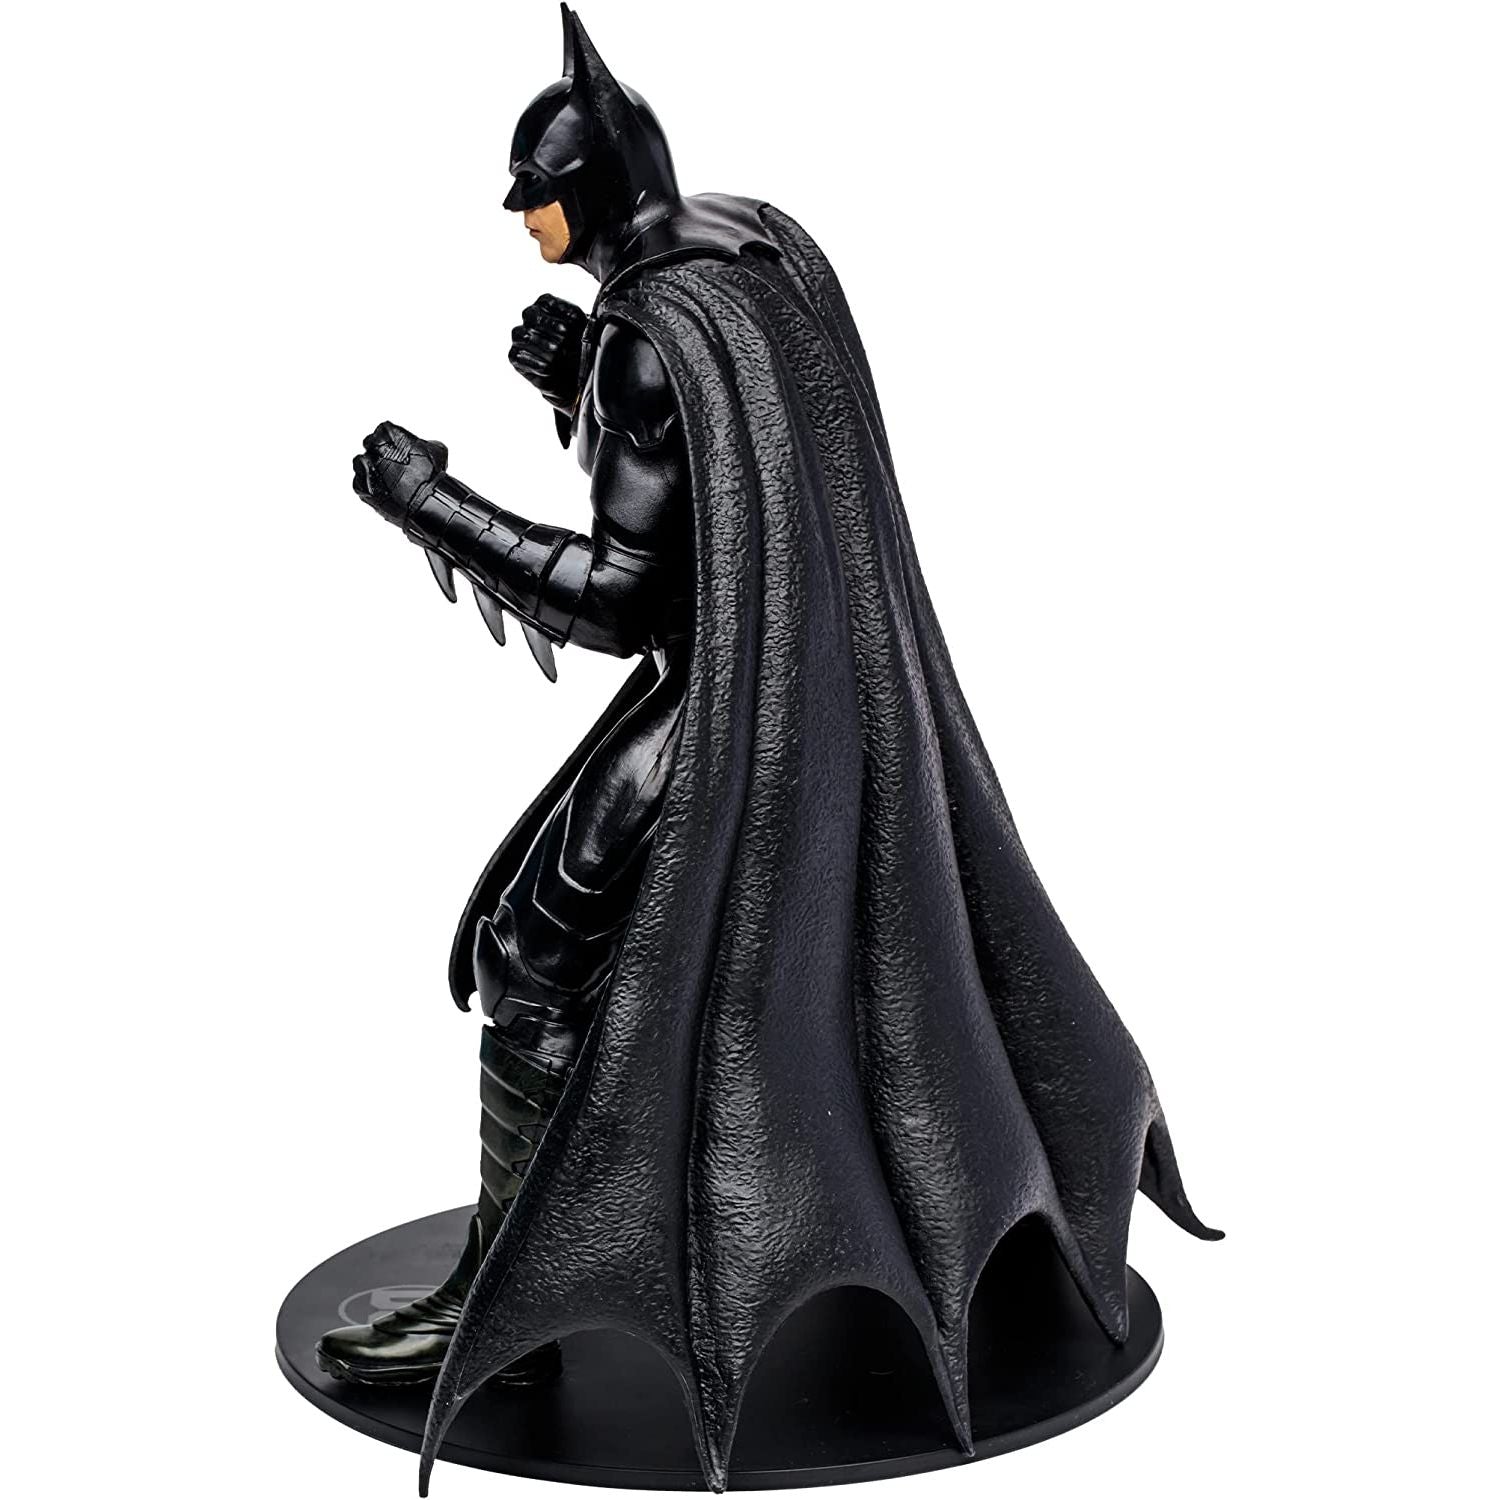  DC The Flash Movie Batman 12-Inch Scale Statue - Heretoserveyou